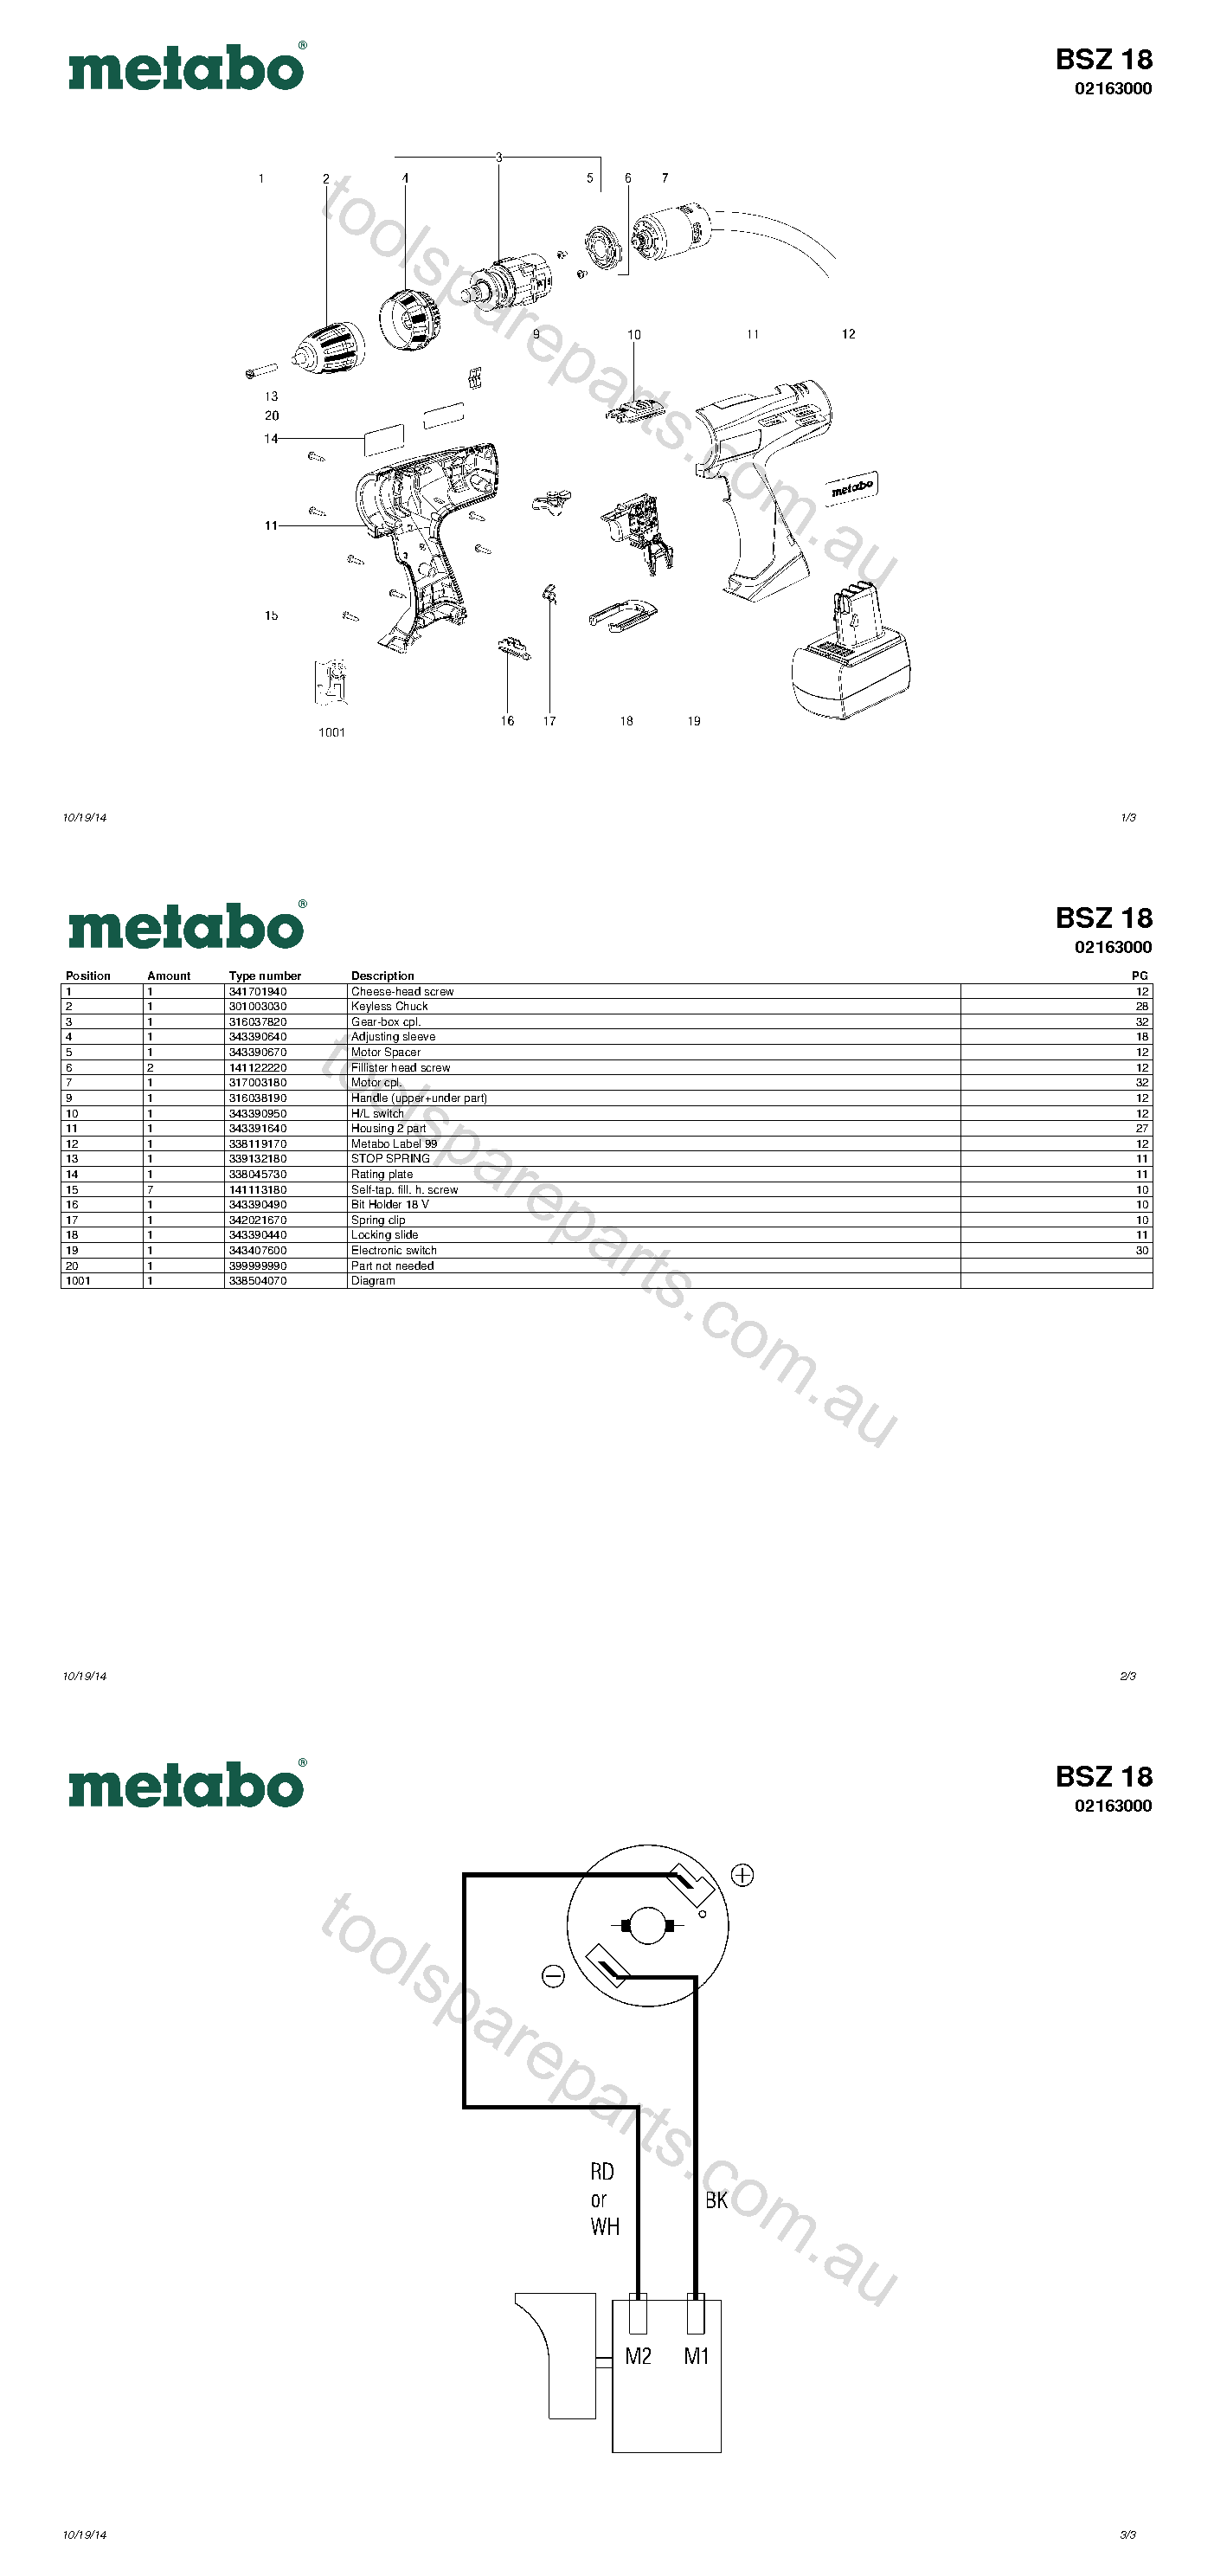 Metabo BSZ 18 02163000  Diagram 1